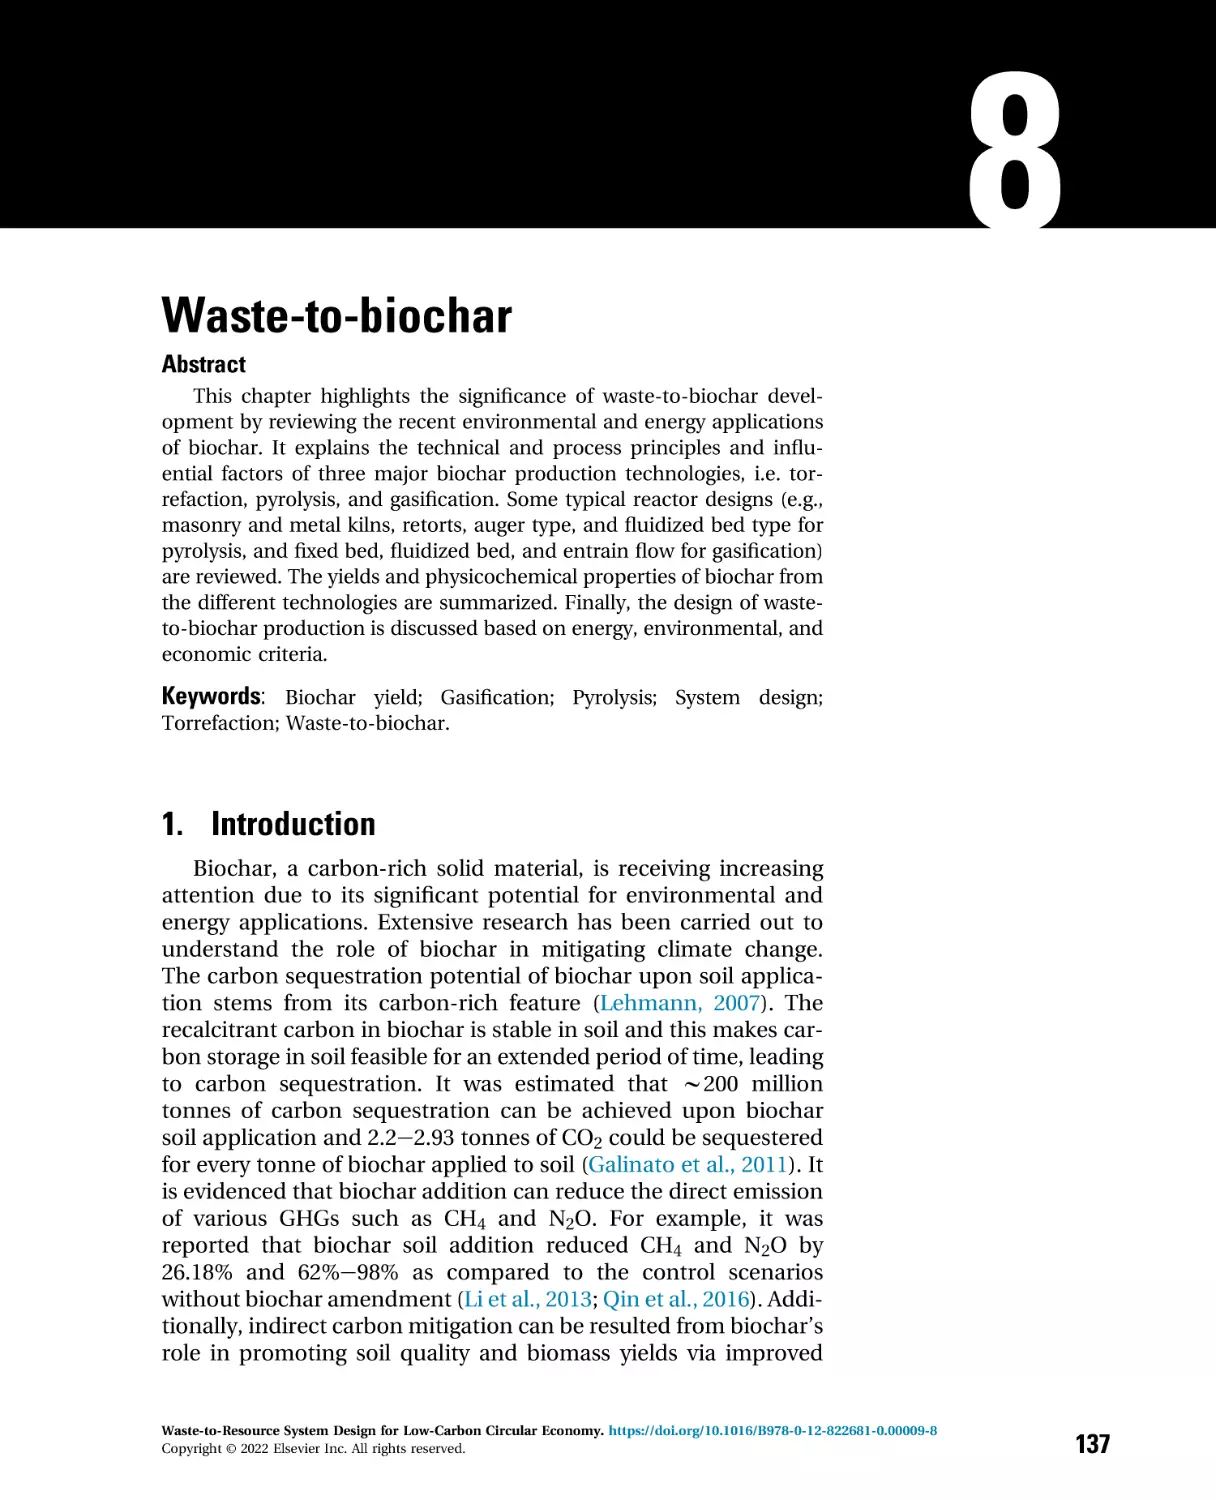 8 - Waste-to-biochar
1. Introduction